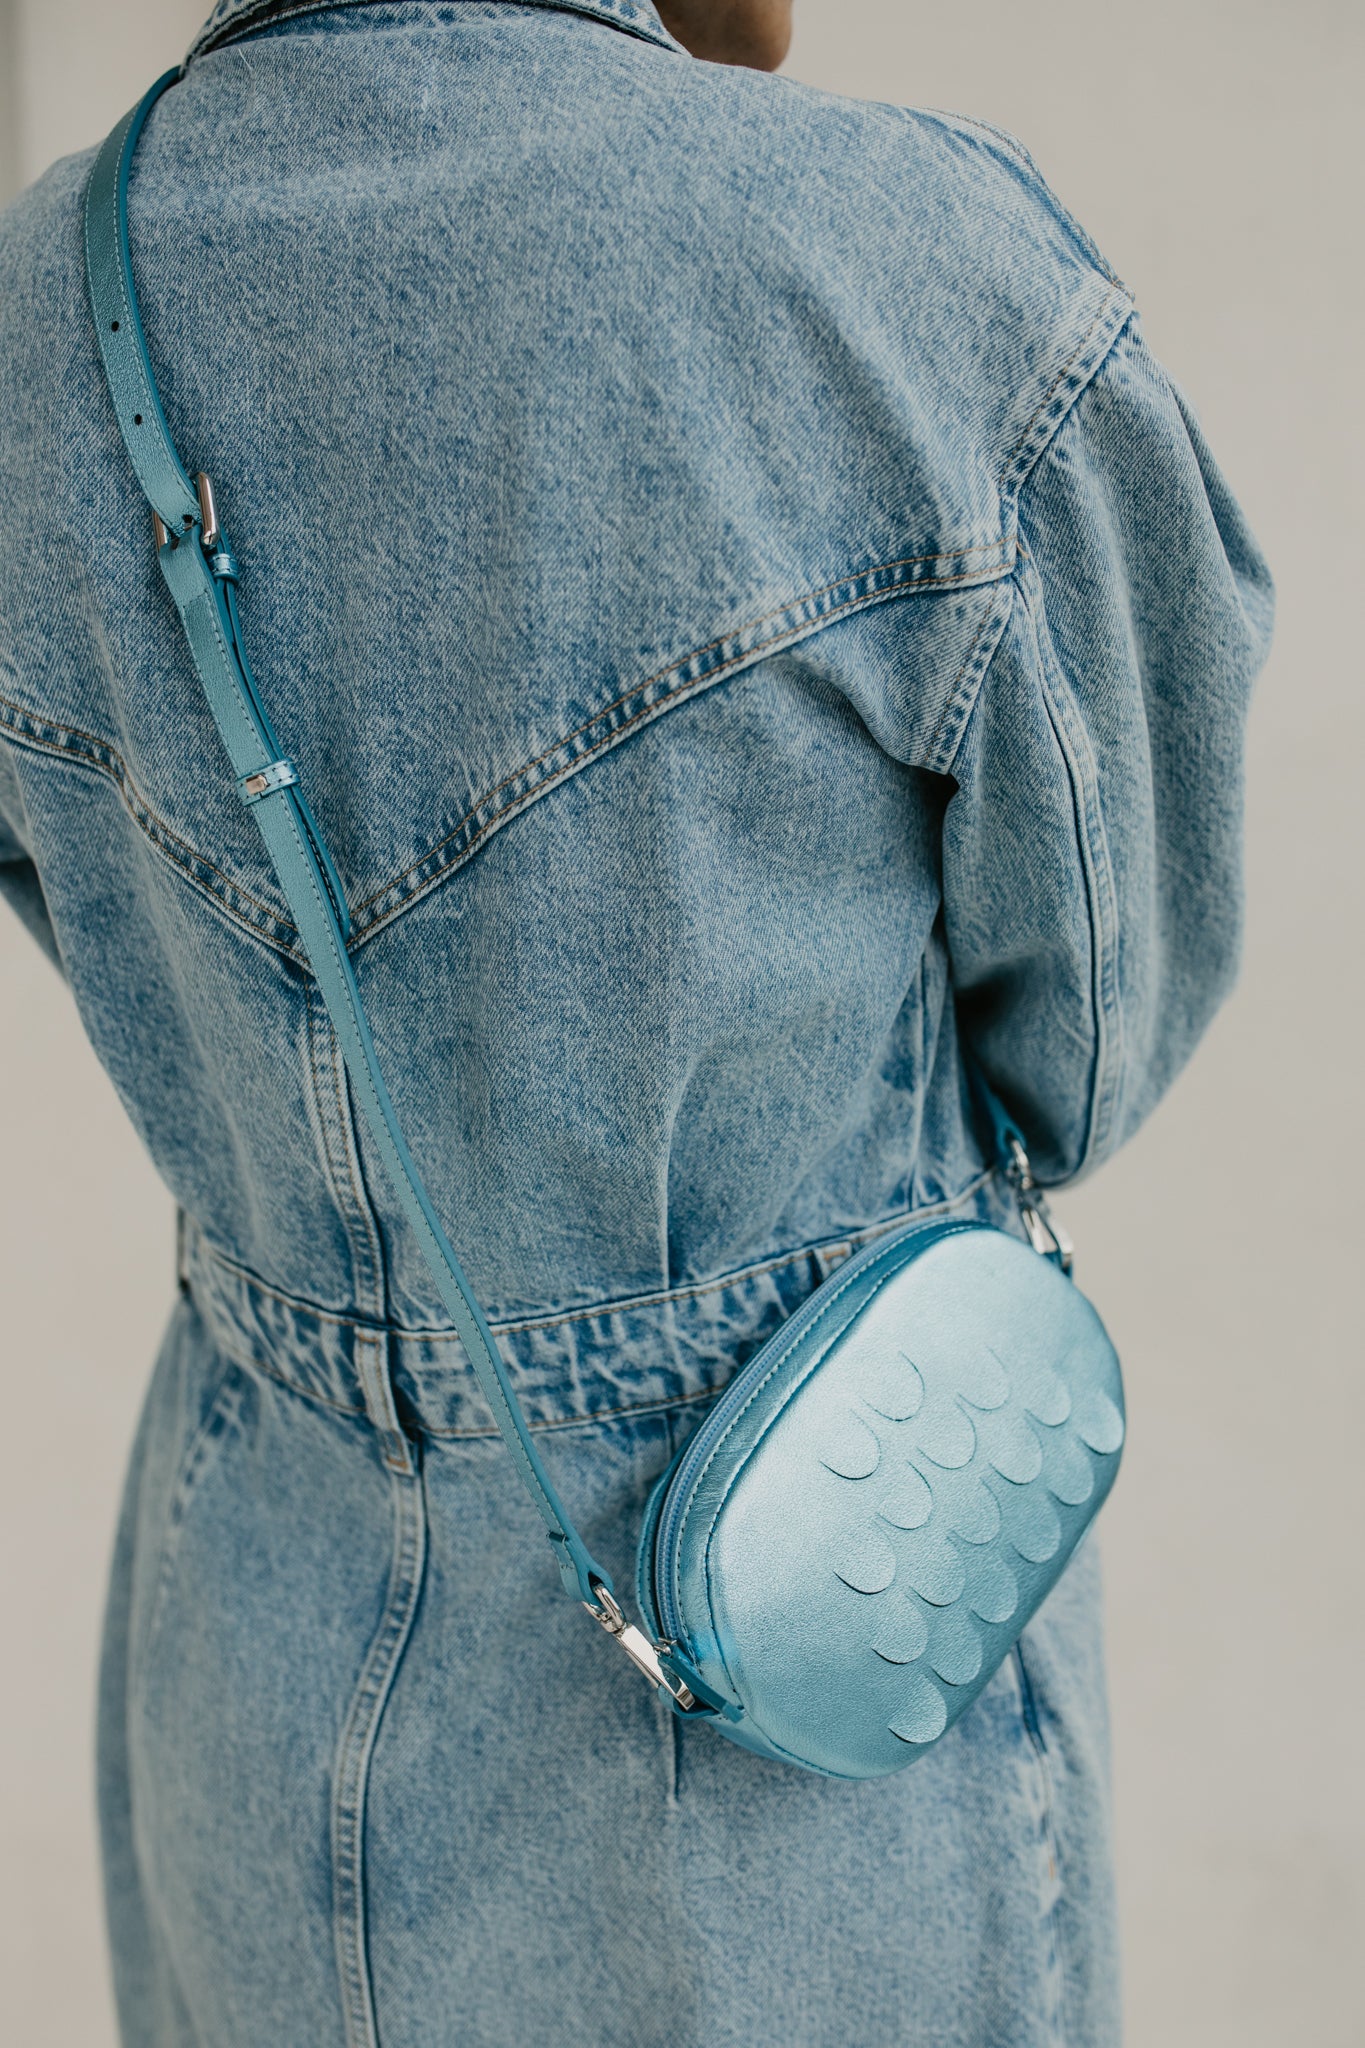 Oval Mini Bag | Baby Blue Shimmer